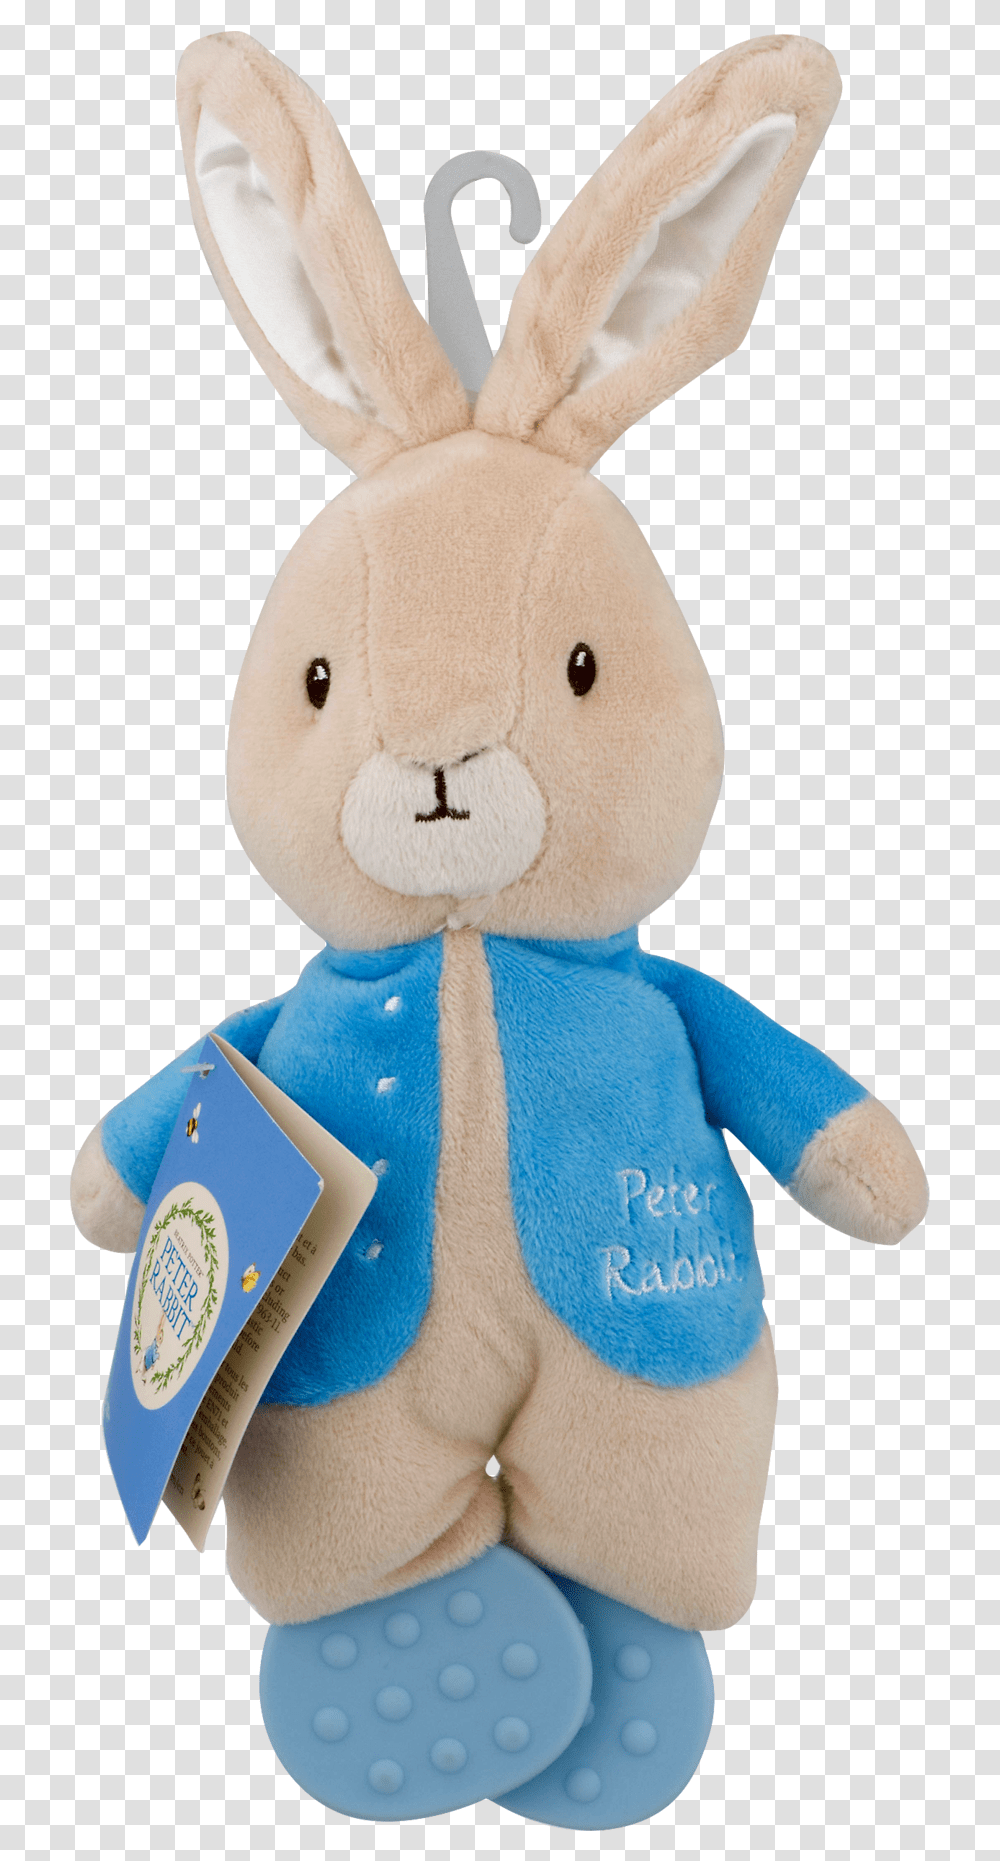 Peter Rabbit Plus, Toy, Doll, Plush, Teddy Bear Transparent Png